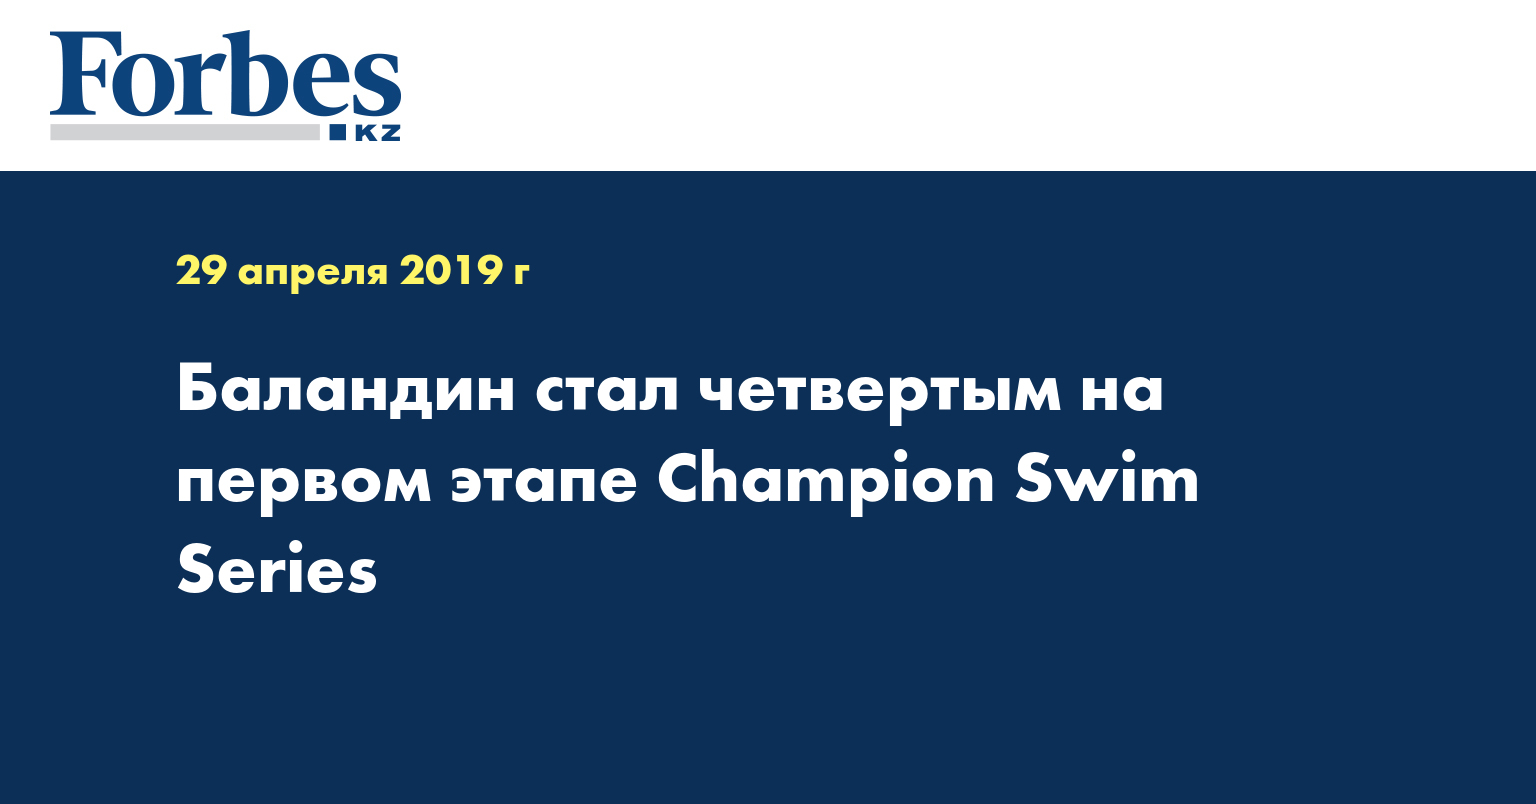 Баландин стал четвертым на первом этапе Champion Swim Series